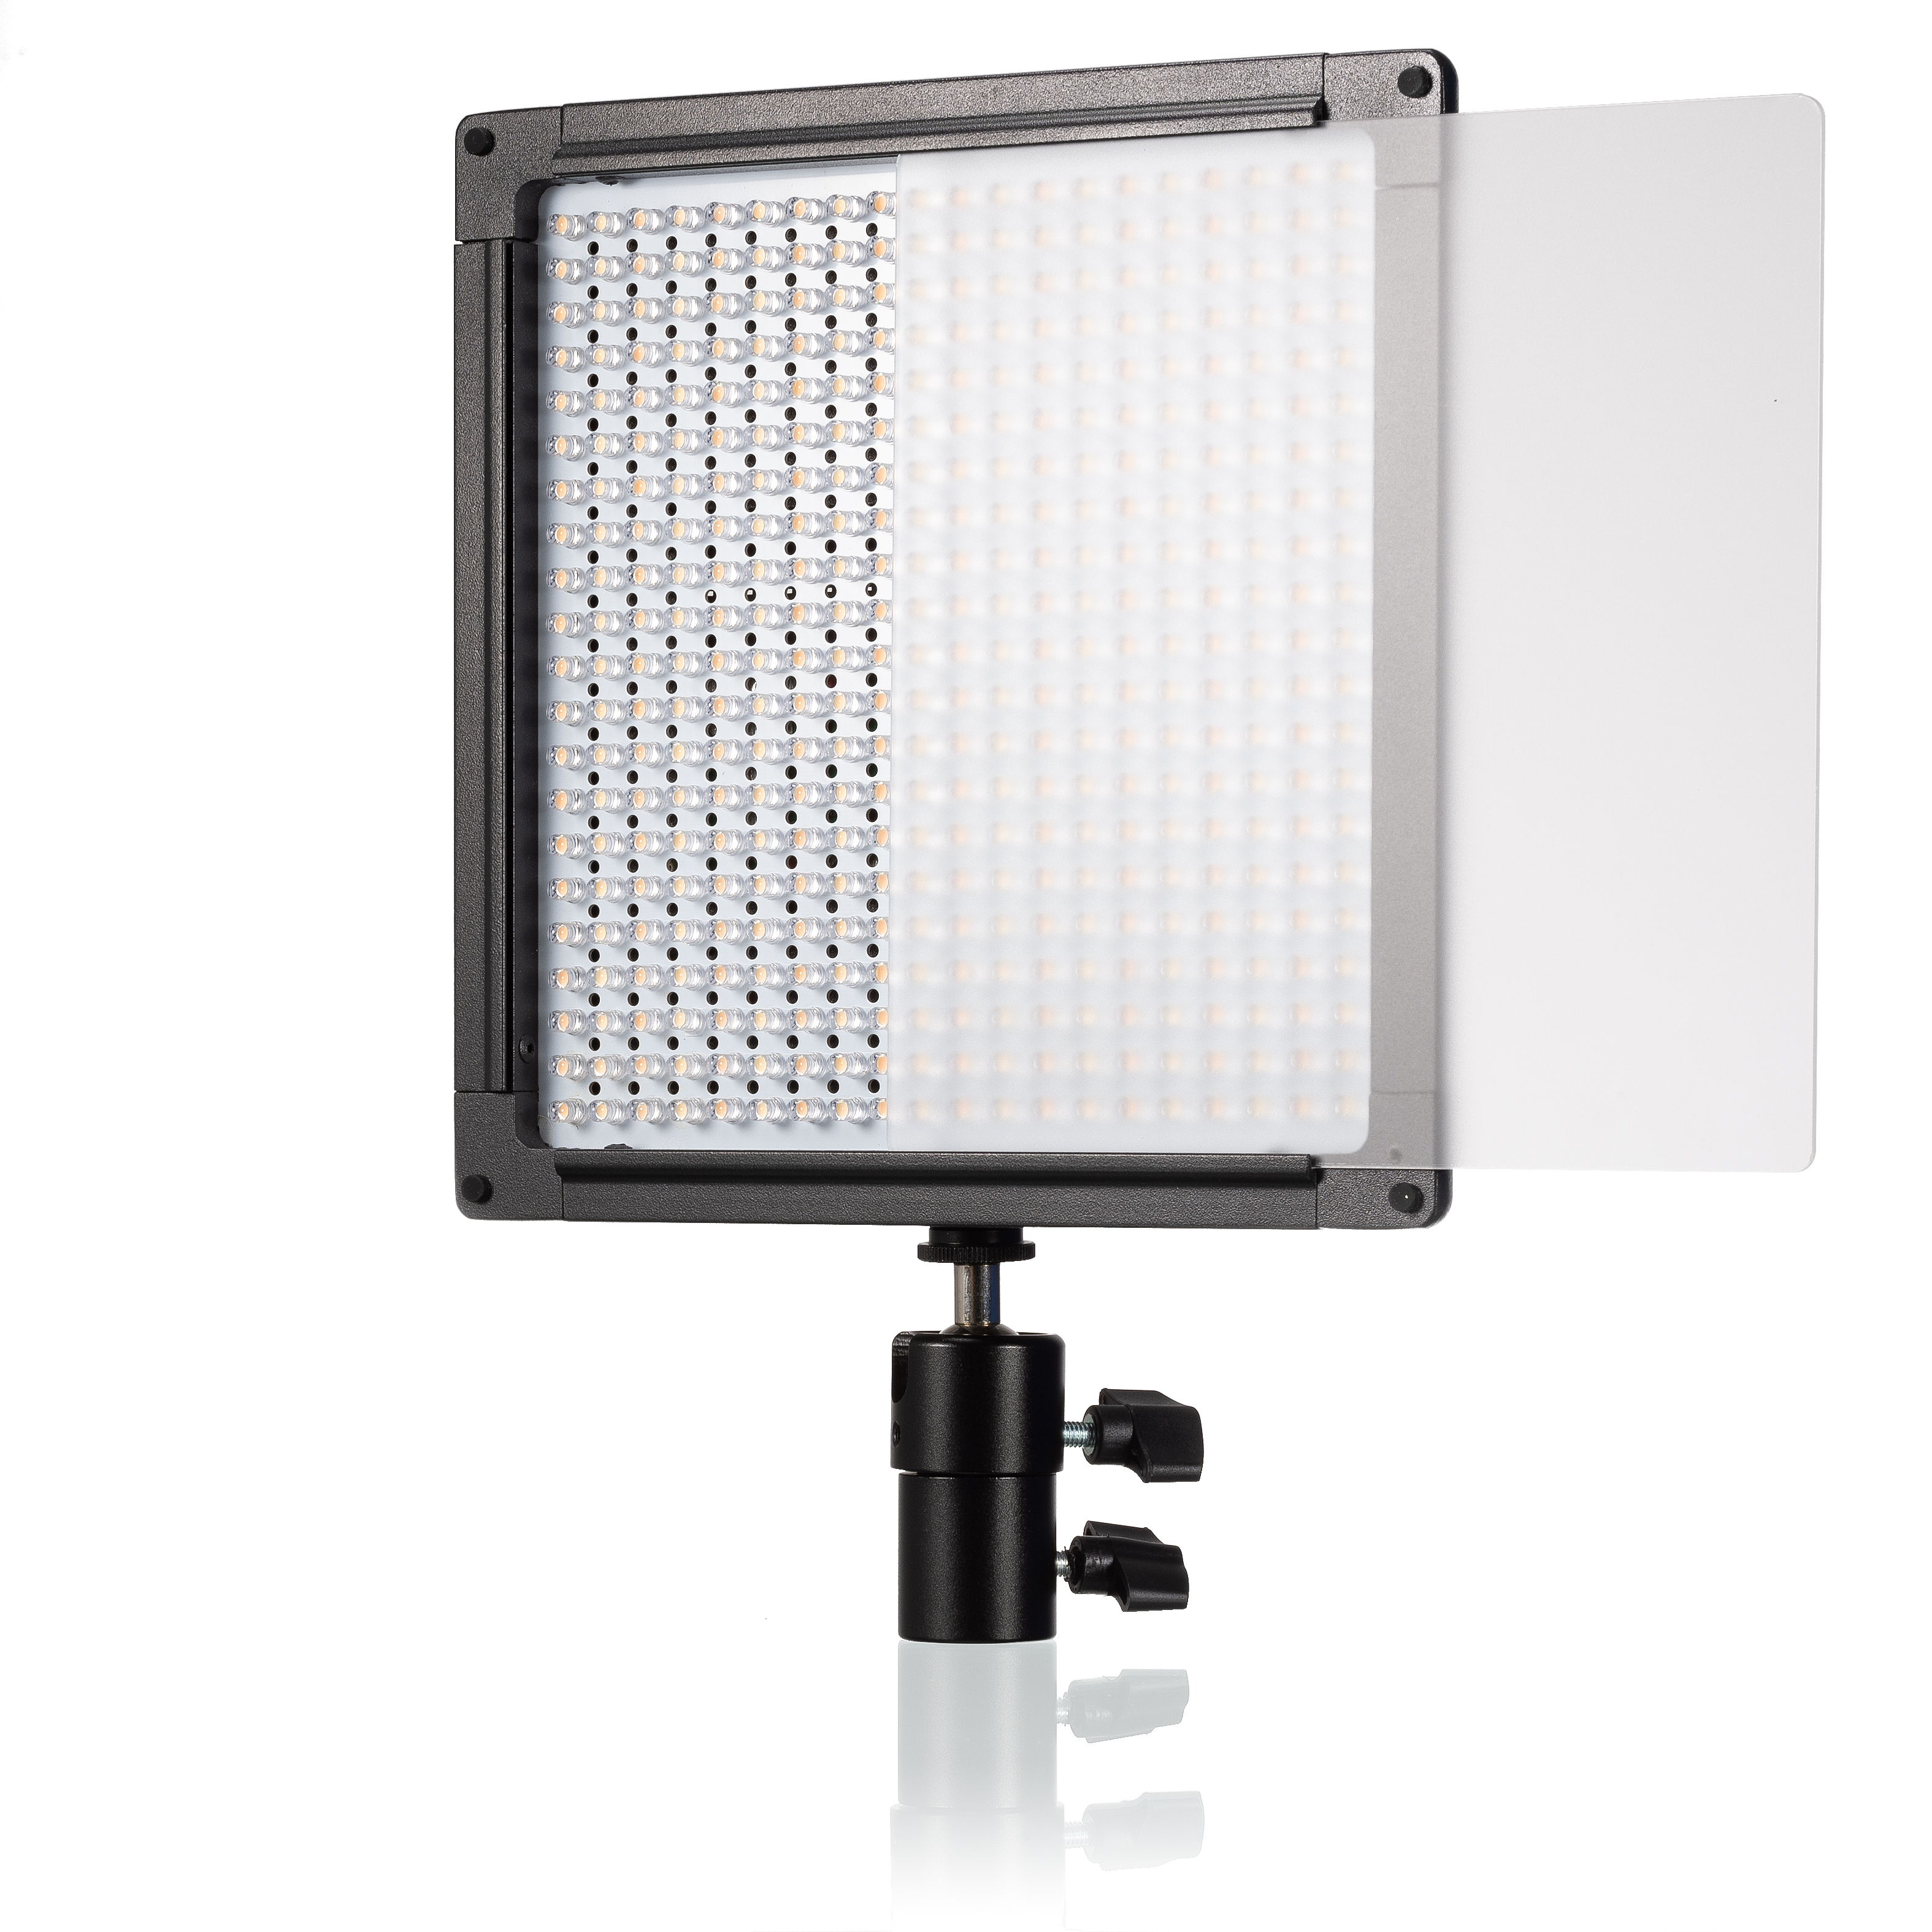 BRESSER LED SH-420A Bi-Color (25 W / 3700 LUX) Lampe Studio Slimline